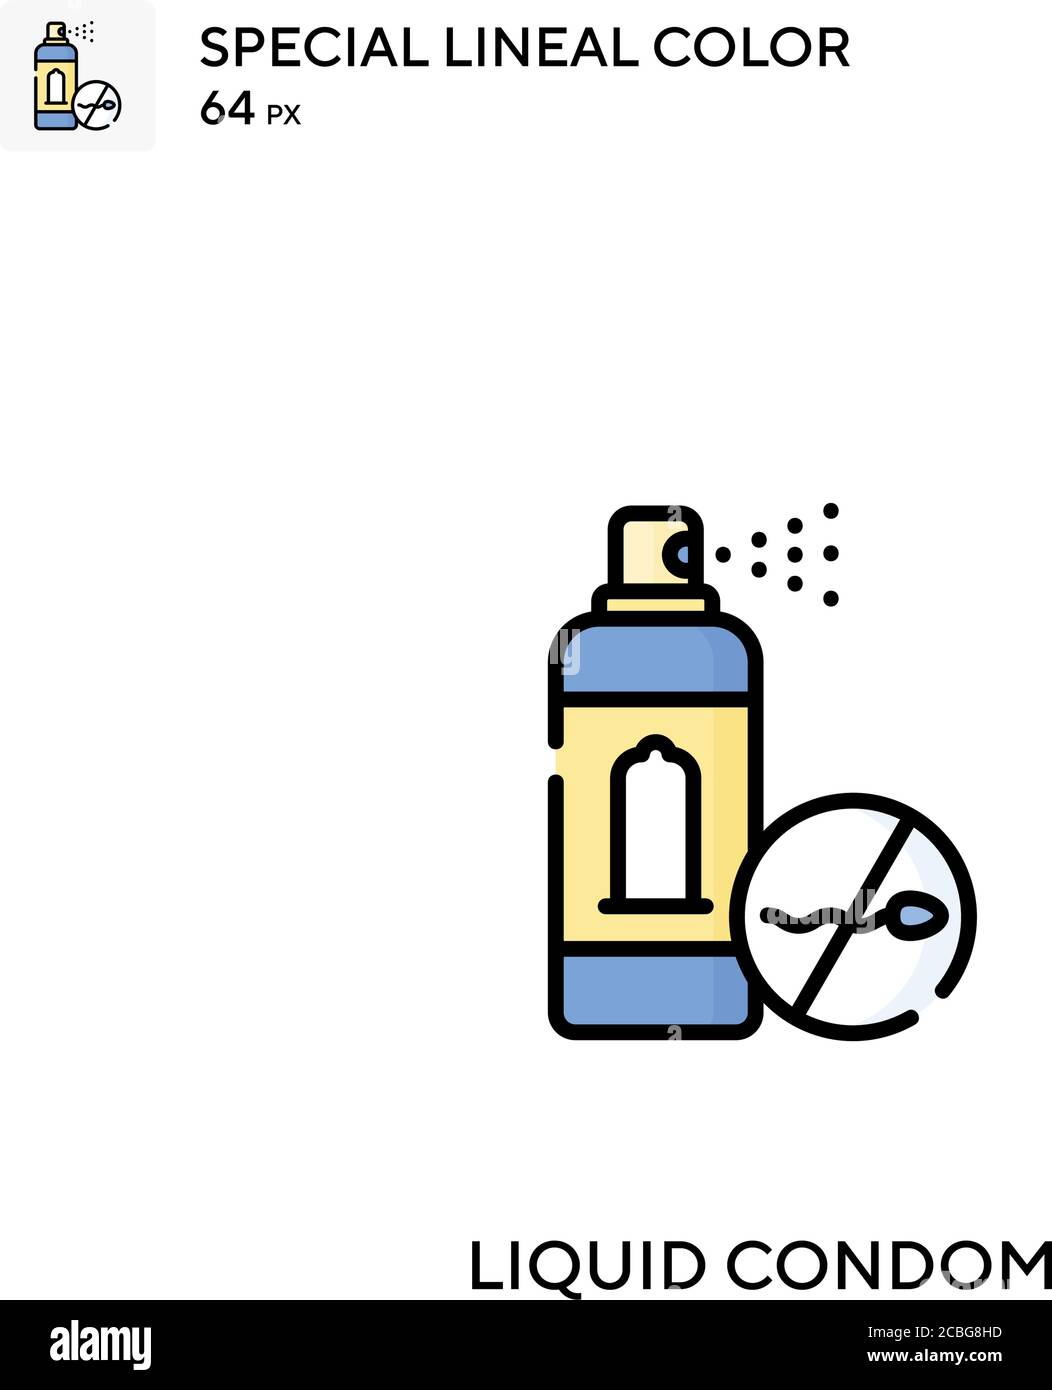 Liquid condom Simple vector icon. Liquid condom icons for your business project Stock Vector